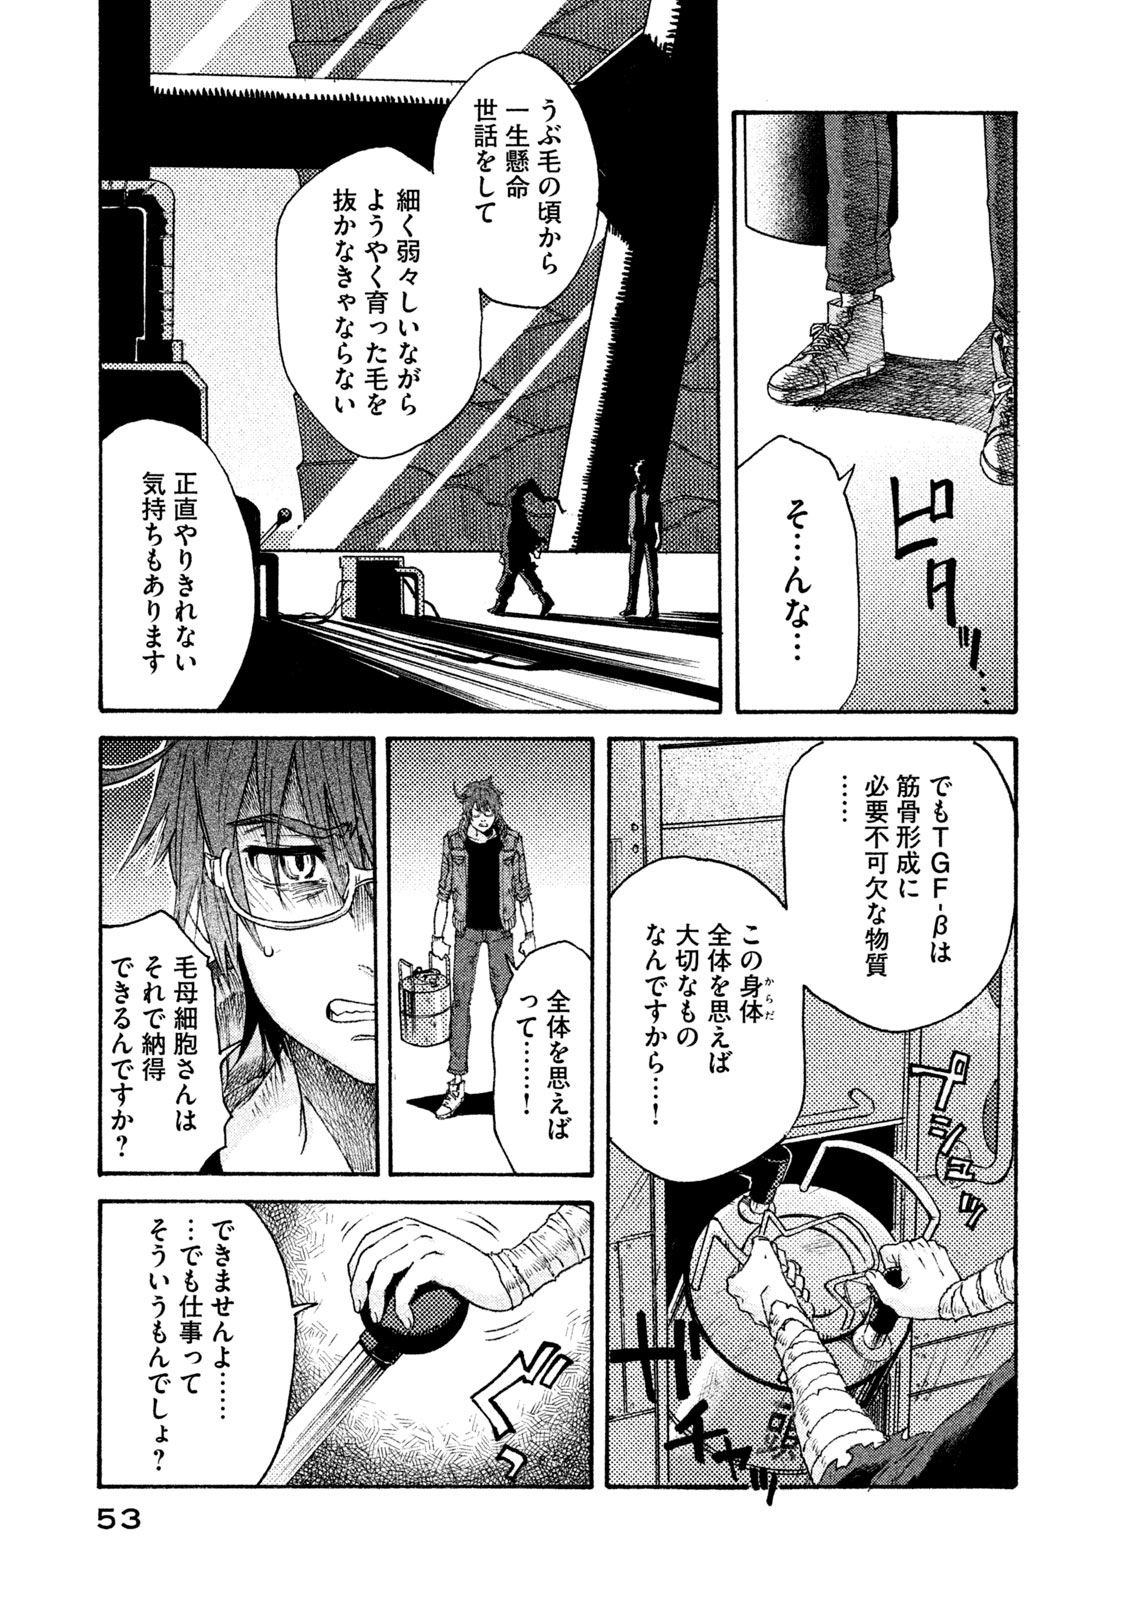 Hataraku Saibou BLACK - Chapter 20 - Page 9